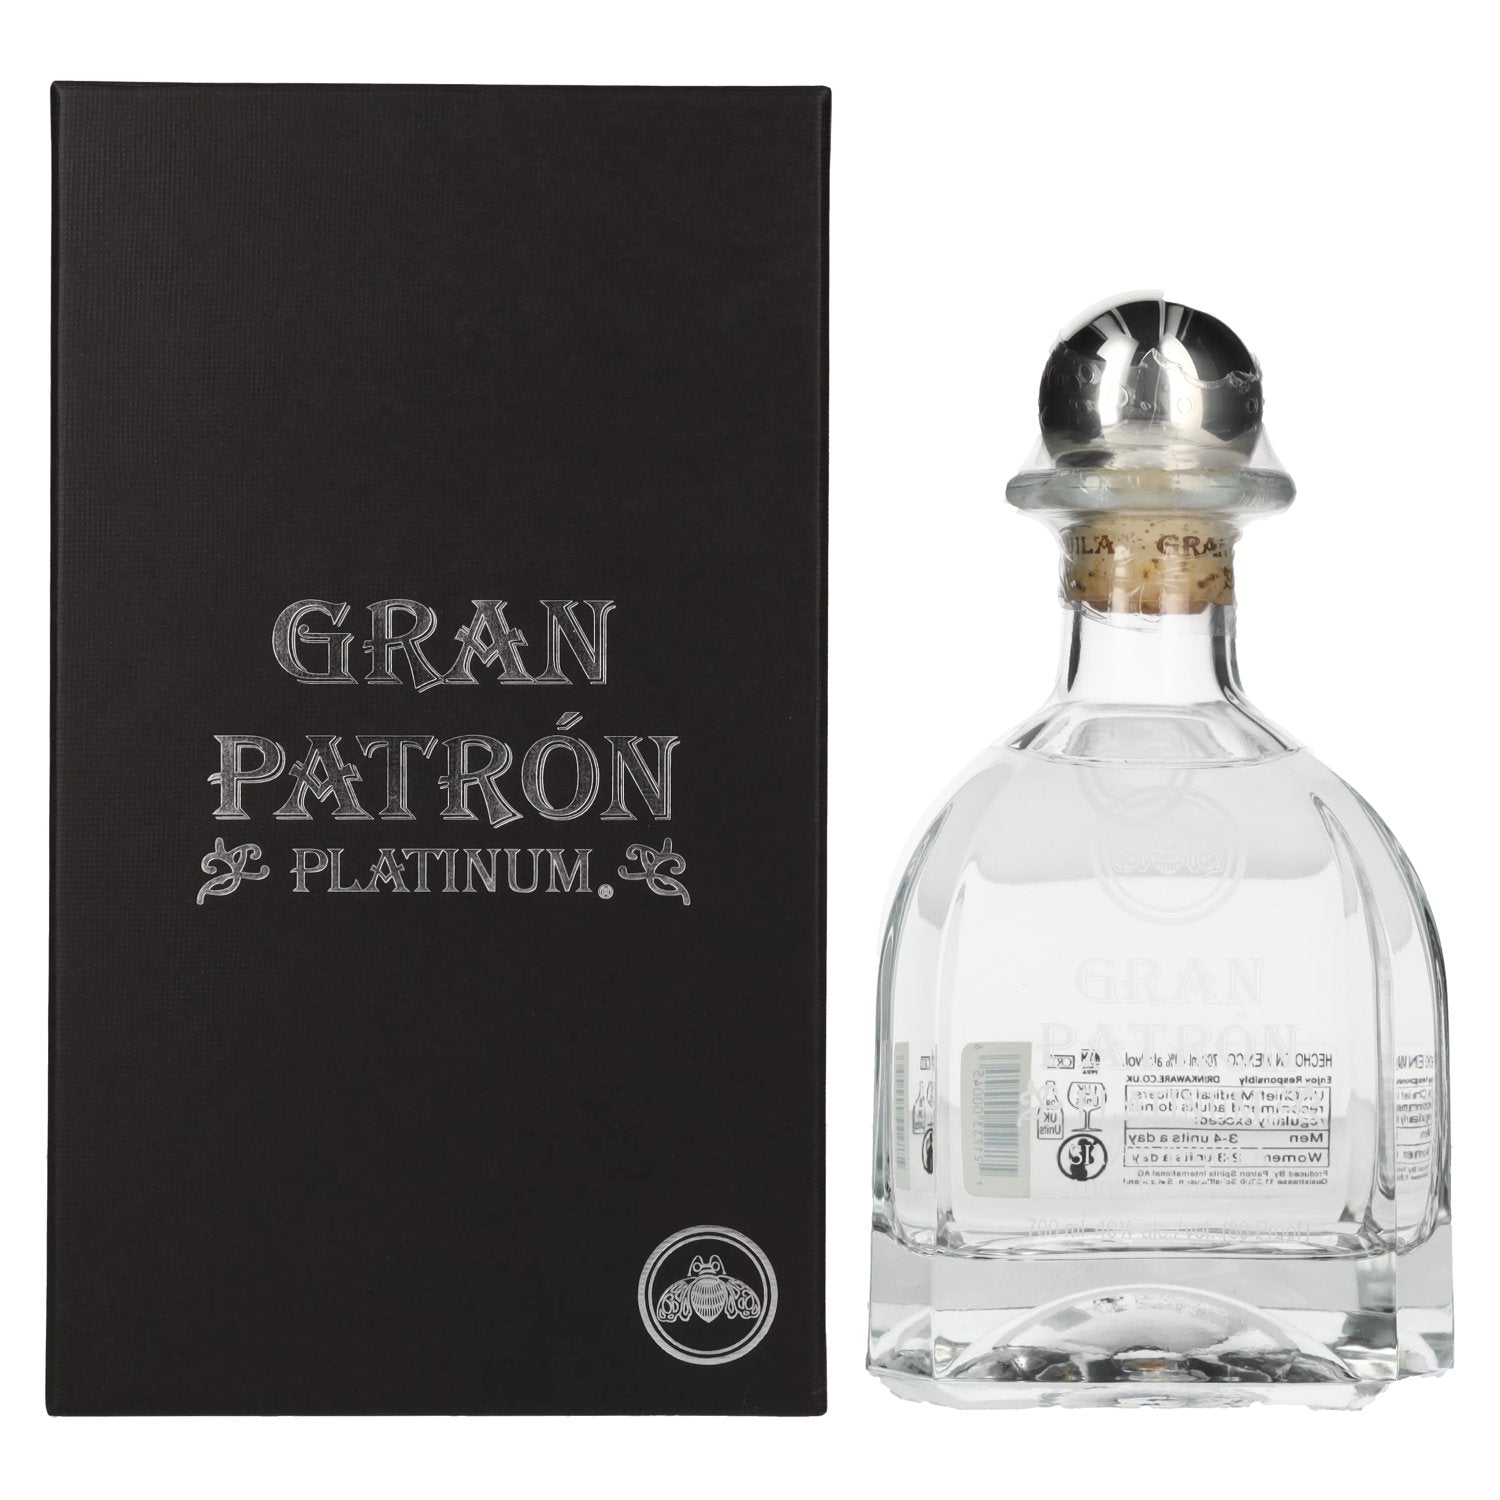 Gran Patron Tequila PLATINUM Silver 100% de Agave 40% Vol. 0,7l in Giftbox